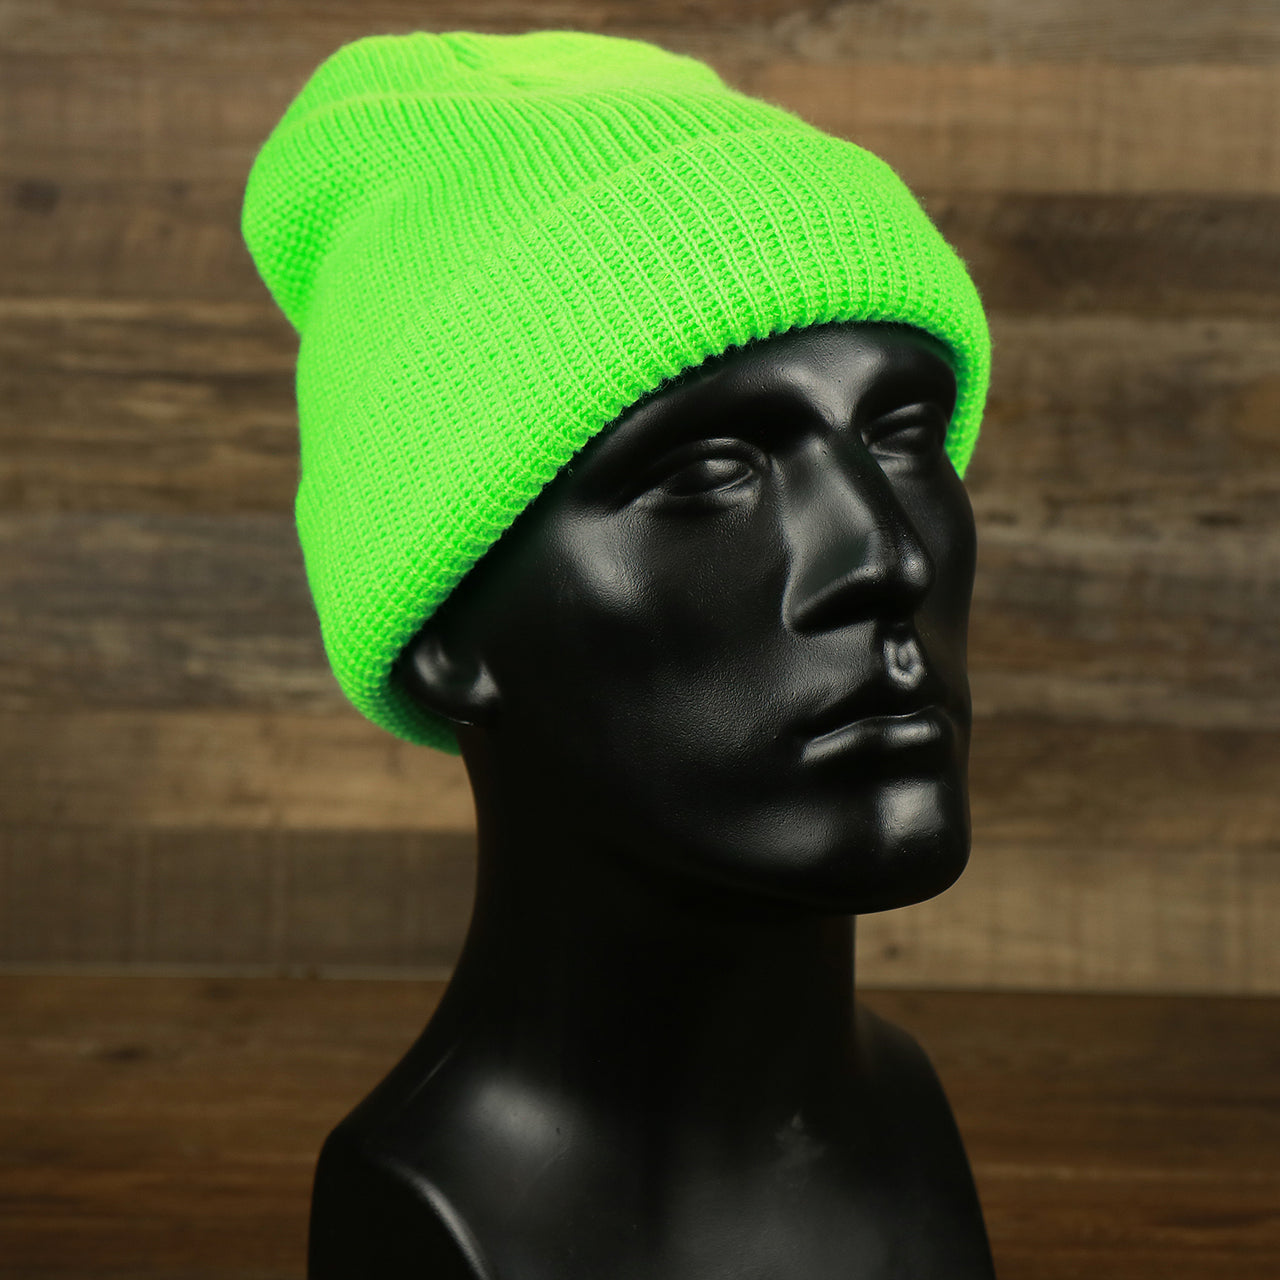 The Safety Green Snug Fit Three Hole Balaclava | Neon Green Knit Ski Mask